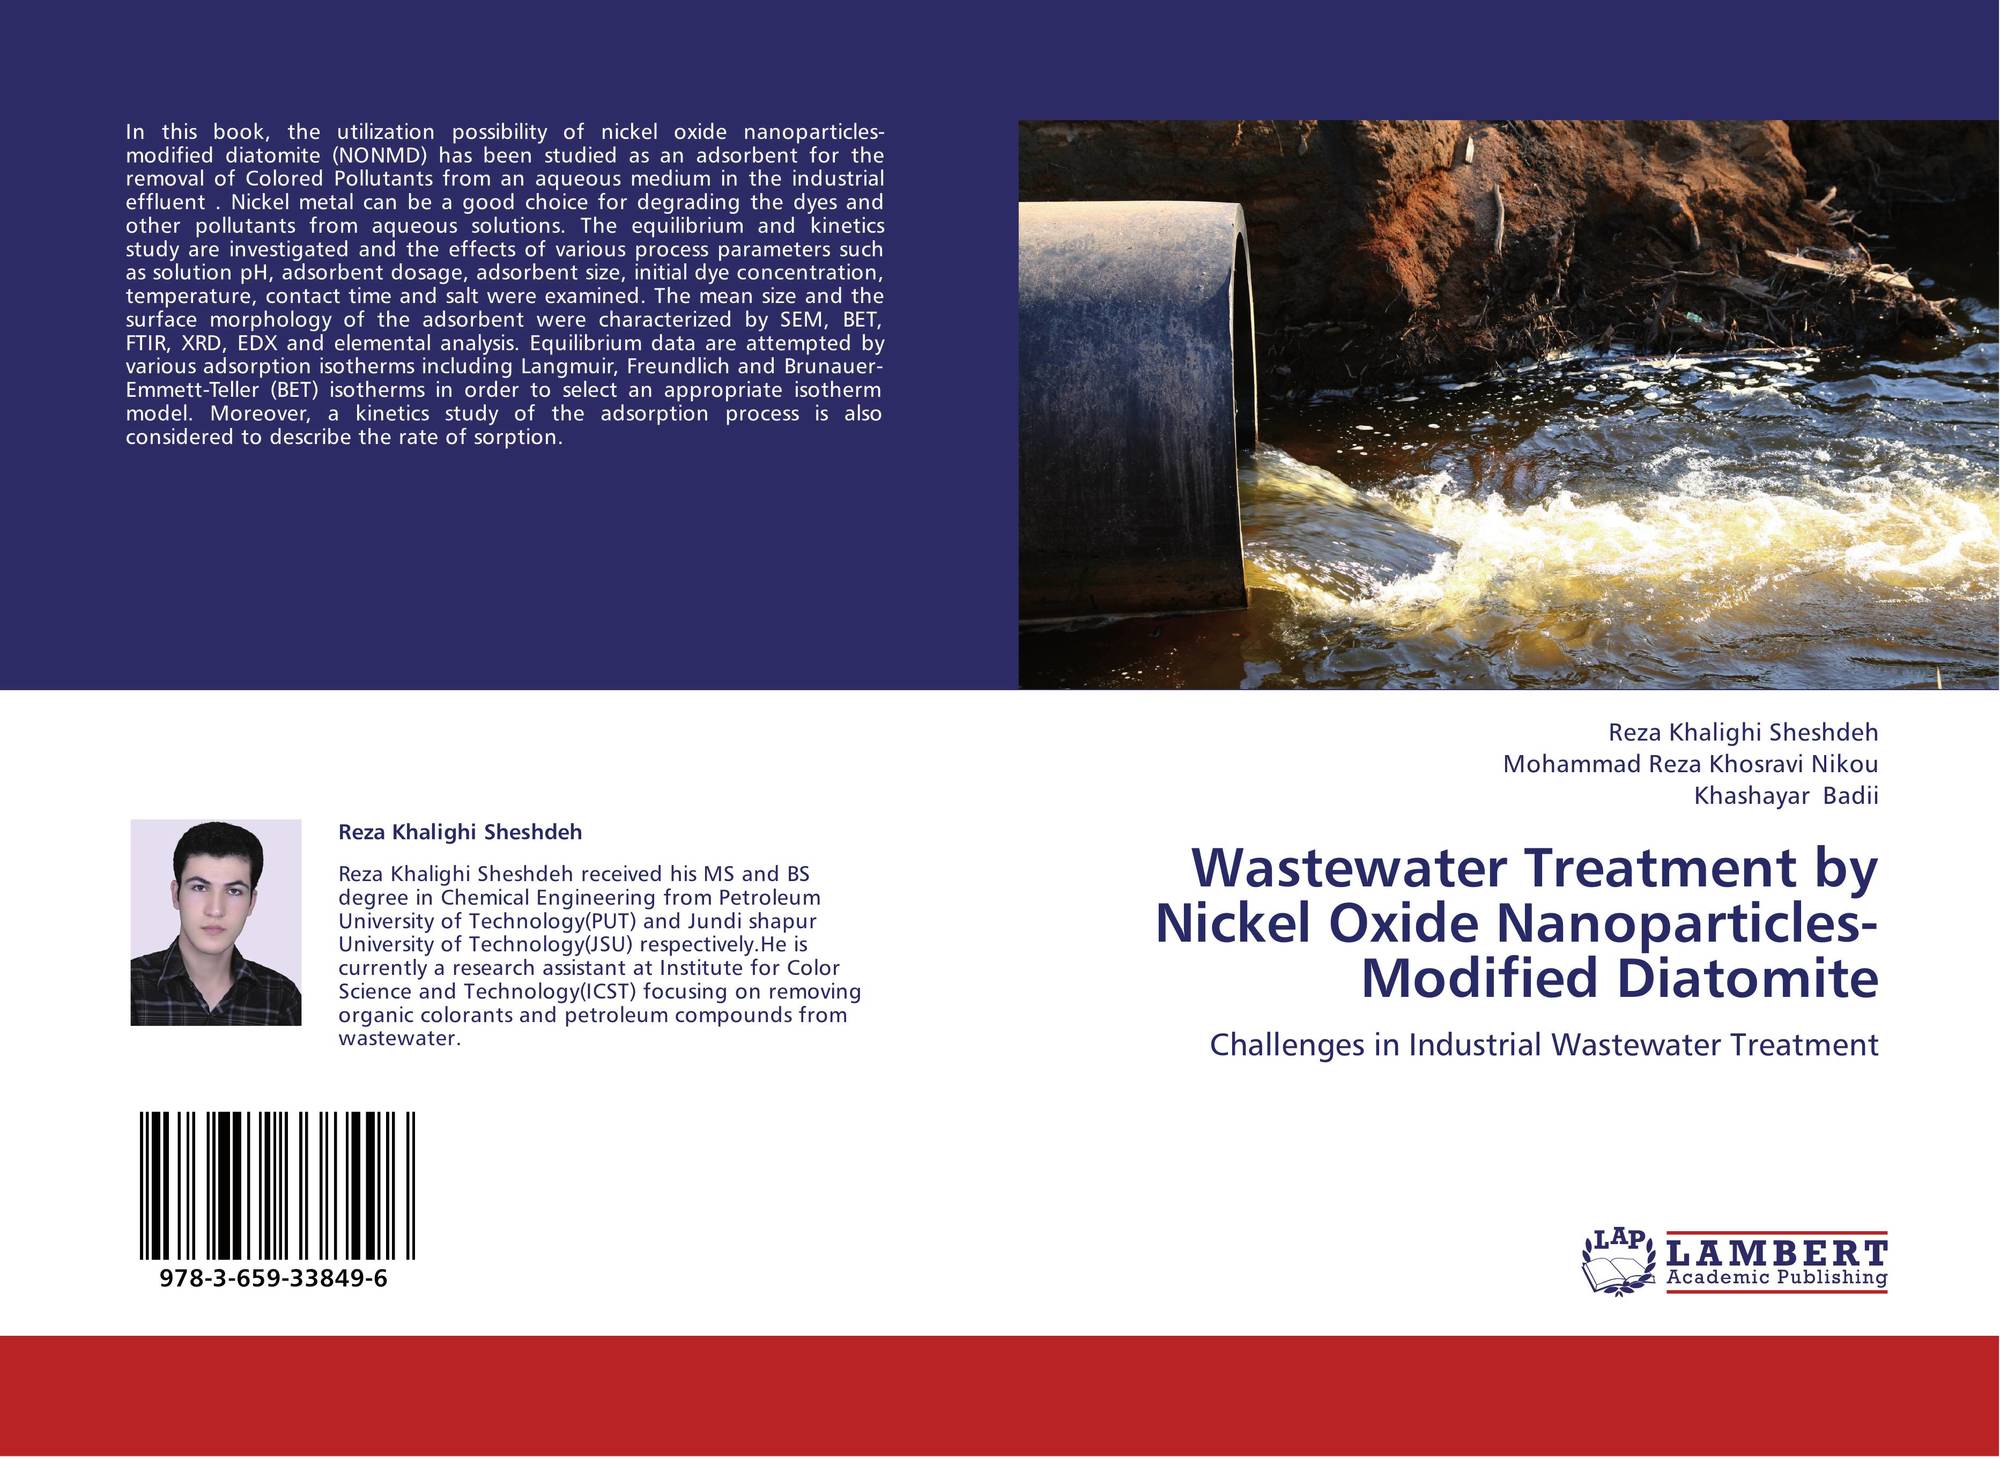 Dissertation on waste water treatment